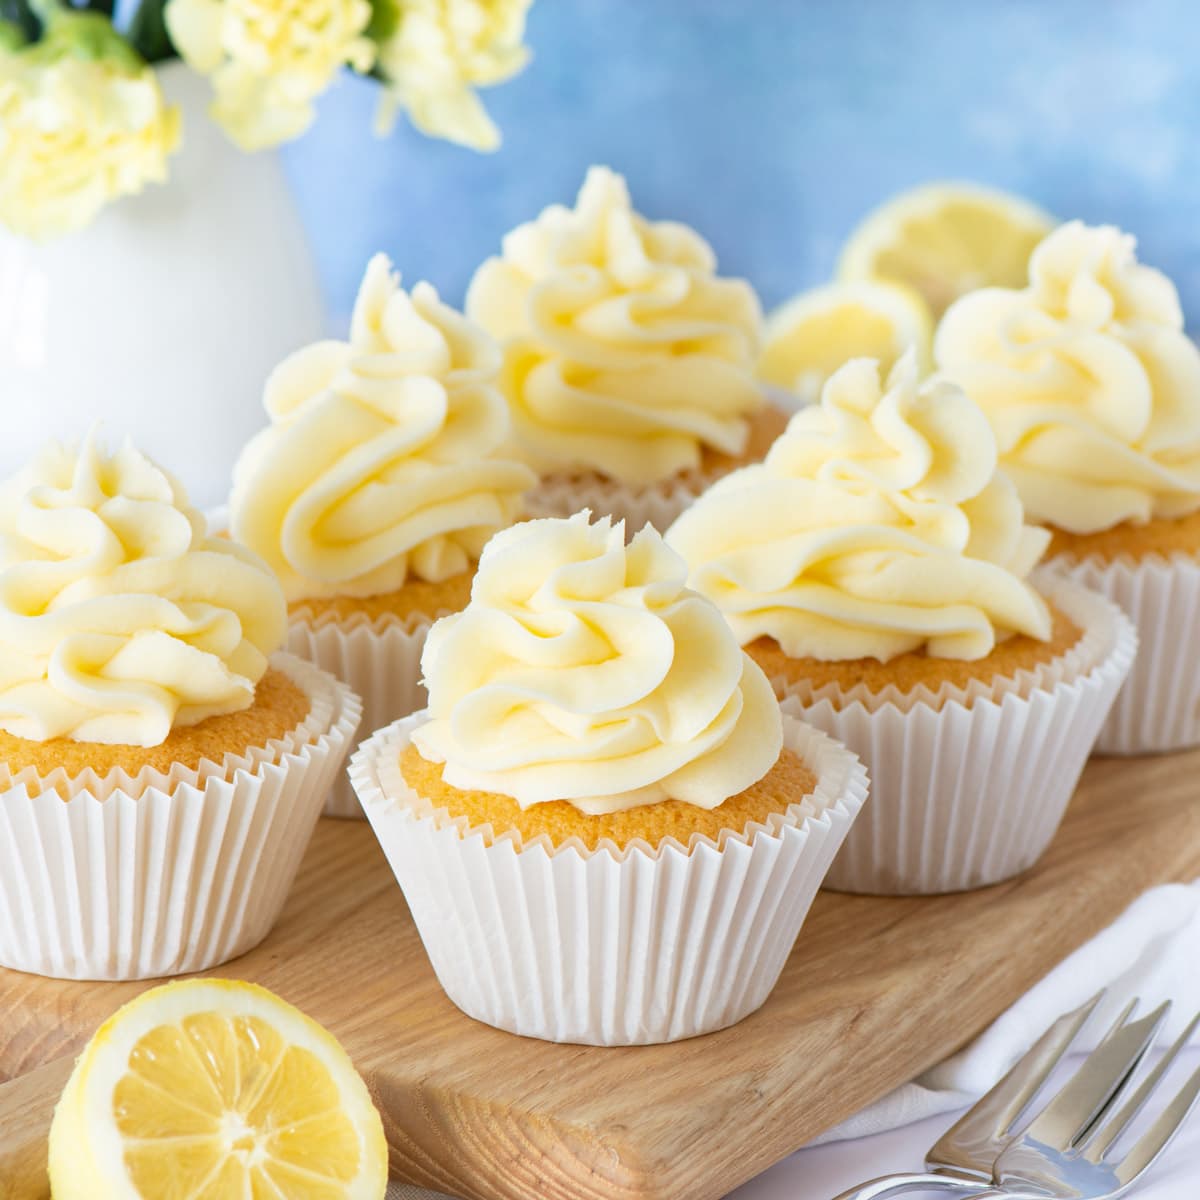 Lemon cupcakes topped with lemon buttercream